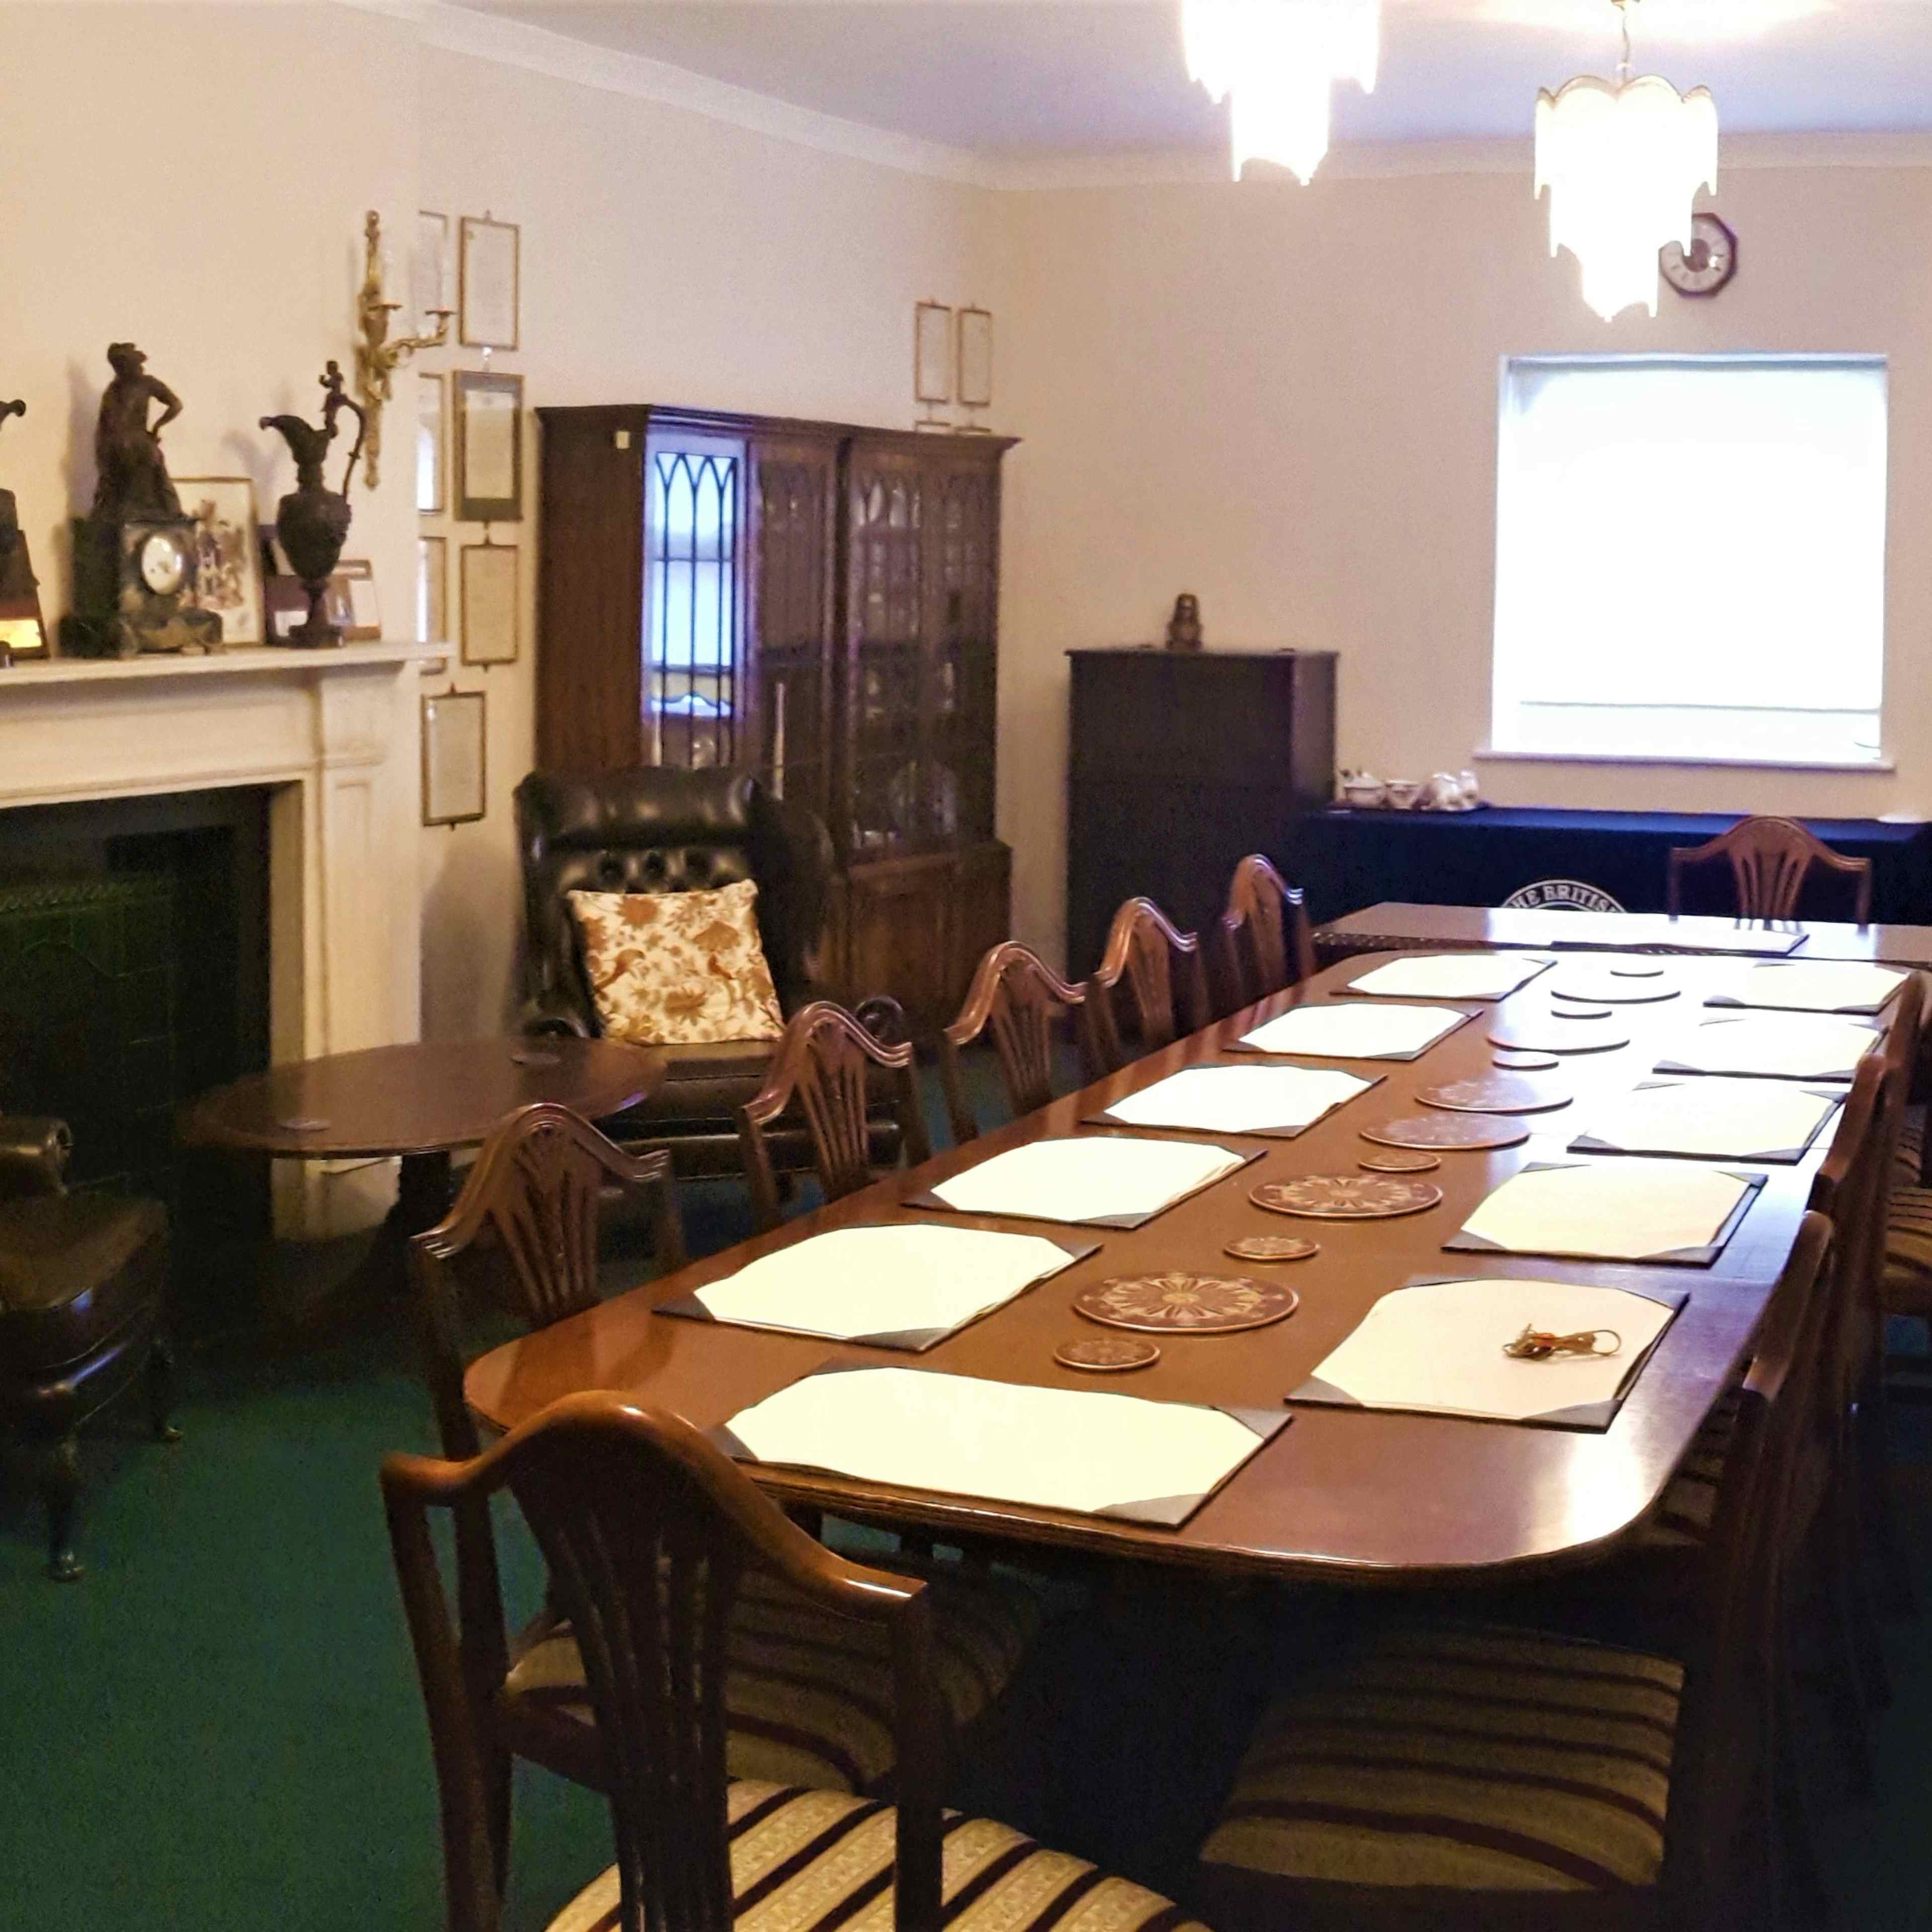 Arthur C. Clarke House - Council Room image 2